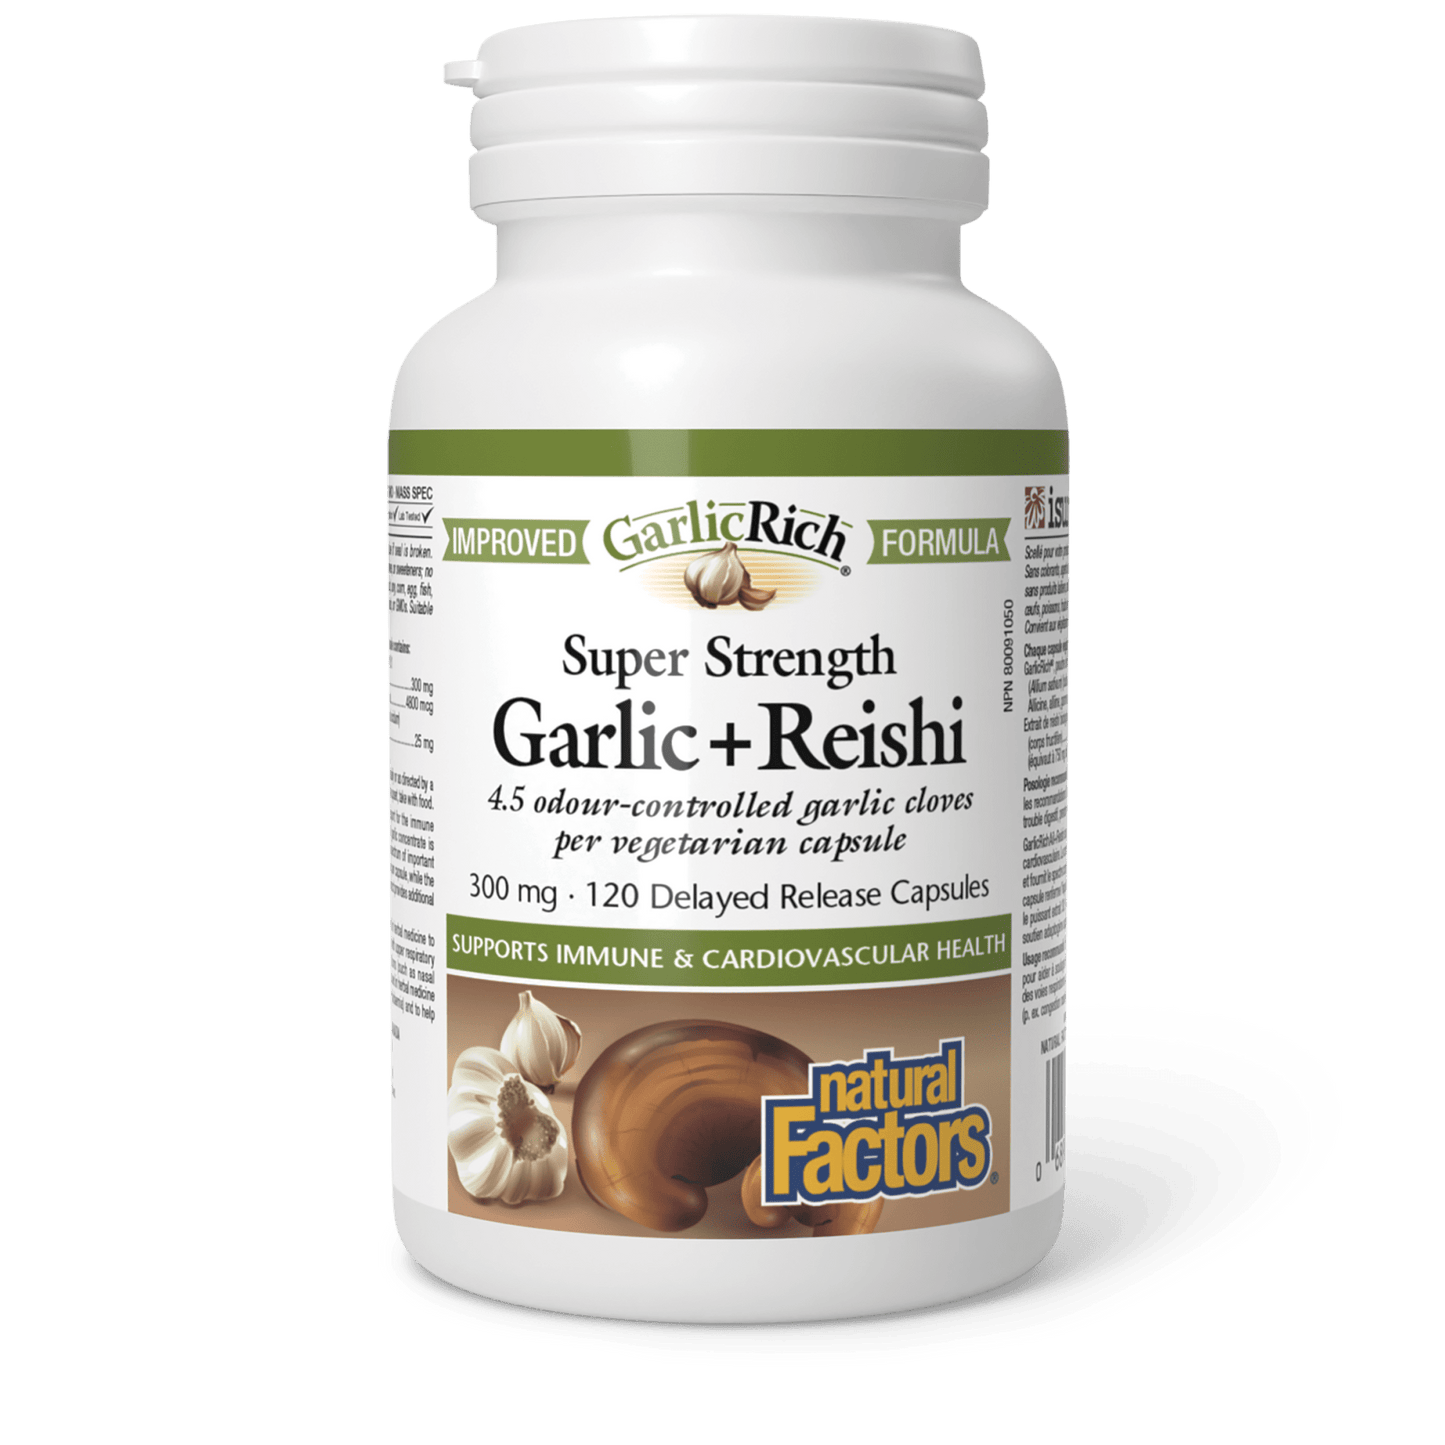 GarlicRich Garlic+Reishi Super Strength 300 mg, Natural Factors|v|image|2334